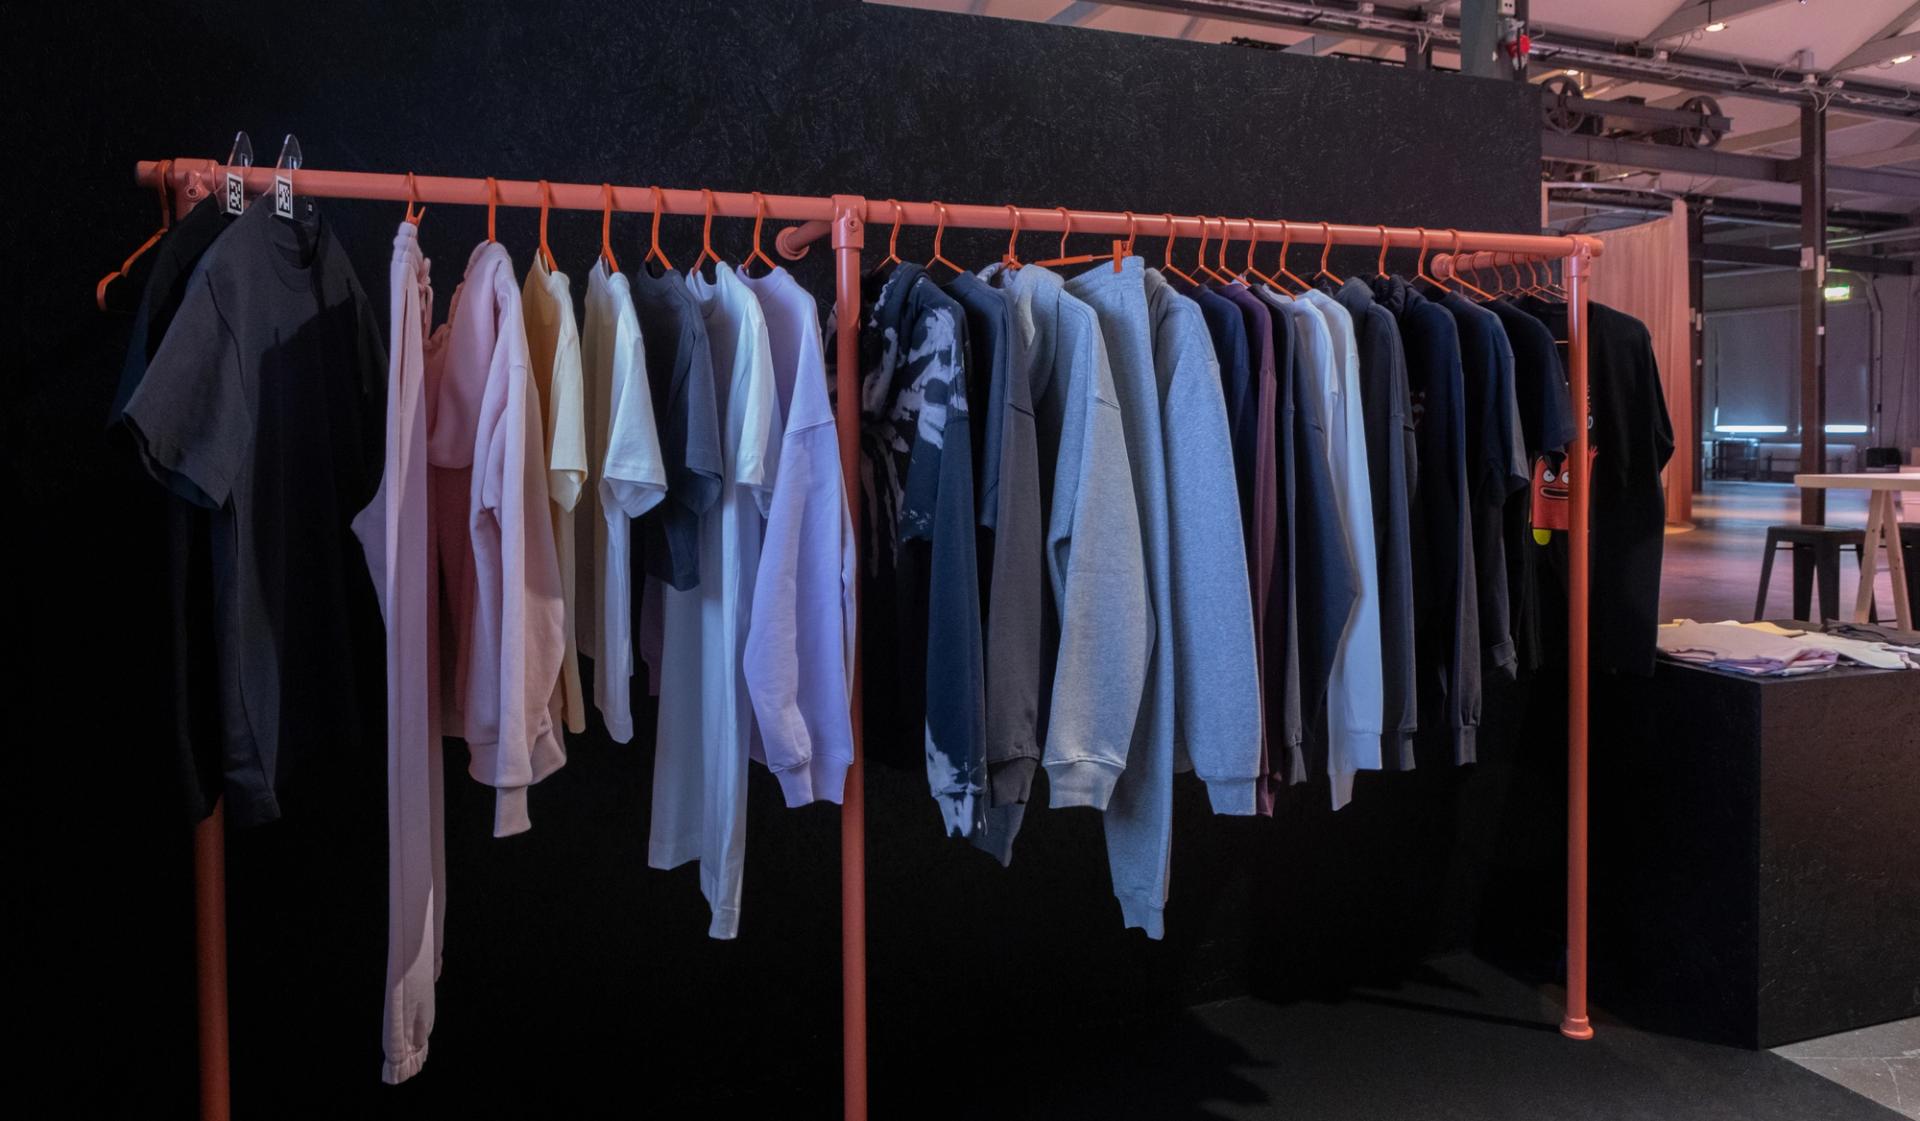 A rack of premium print on demand apparel hangs on red hangers